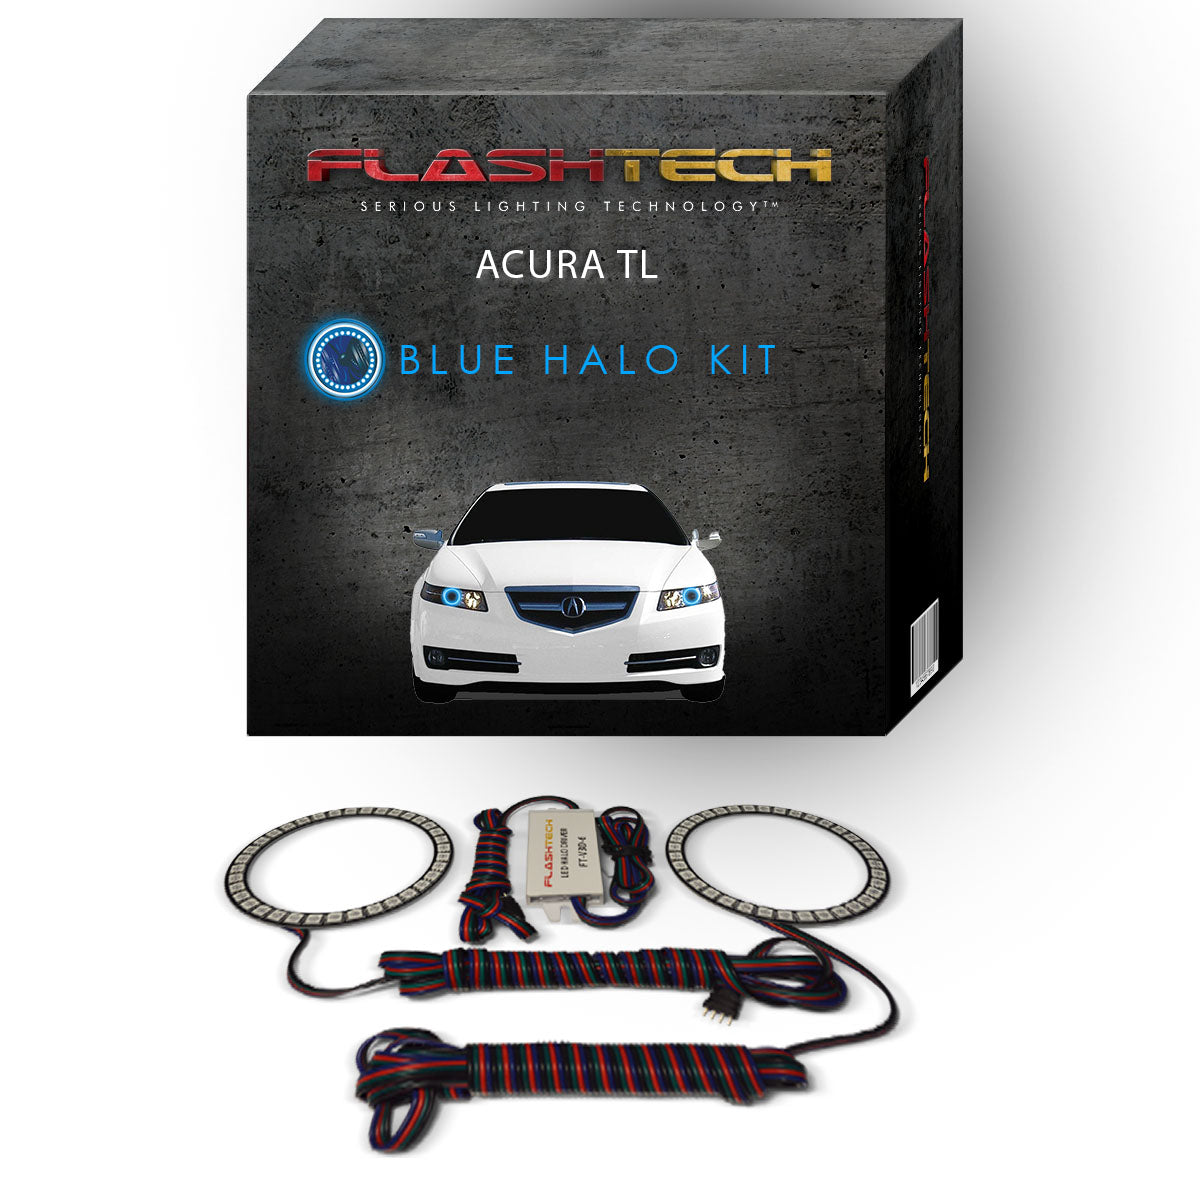 Acura-TL-2004, 2005, 2006, 2007, 2008-LED-Halo-Headlights-RGB-Bluetooth RF Remote-AC-TL0408-V3HBTRF